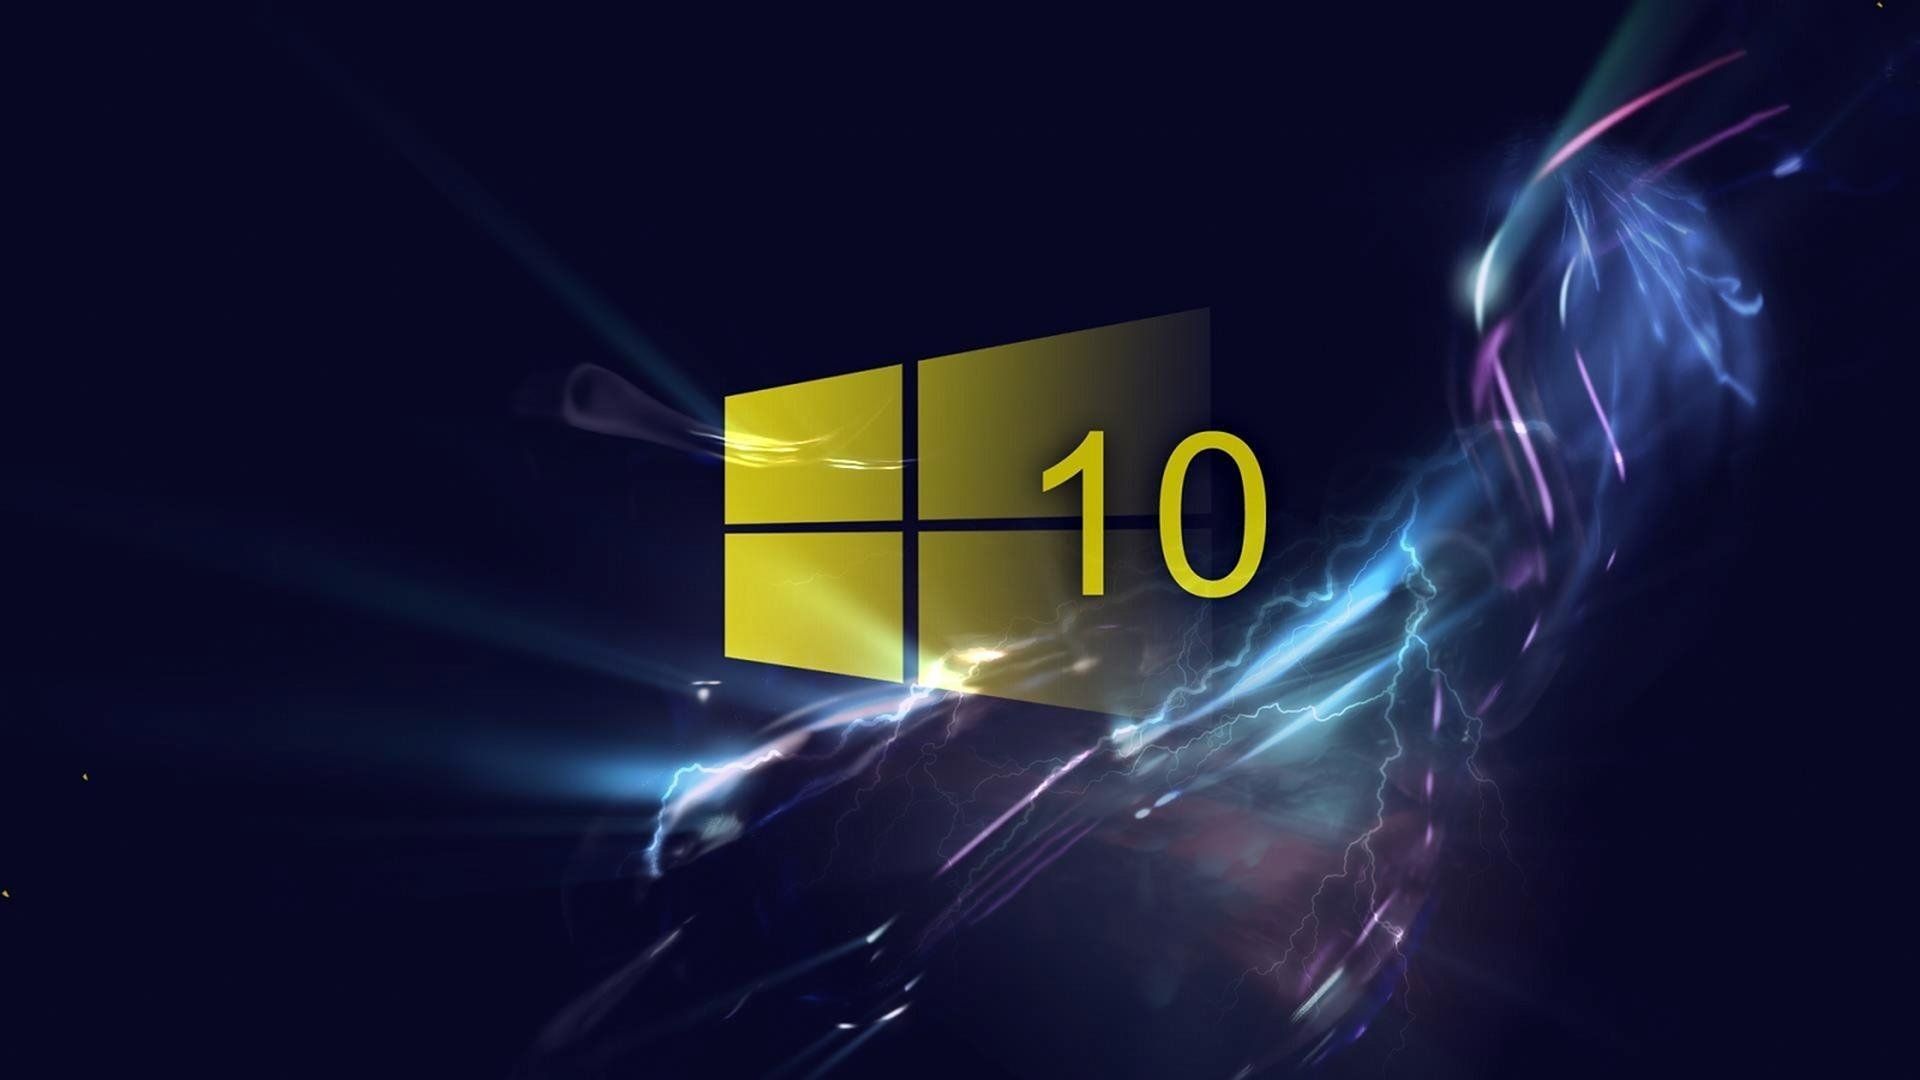 Windows 10 HD Wallpapers   Top Free Windows 10 HD Backgrounds